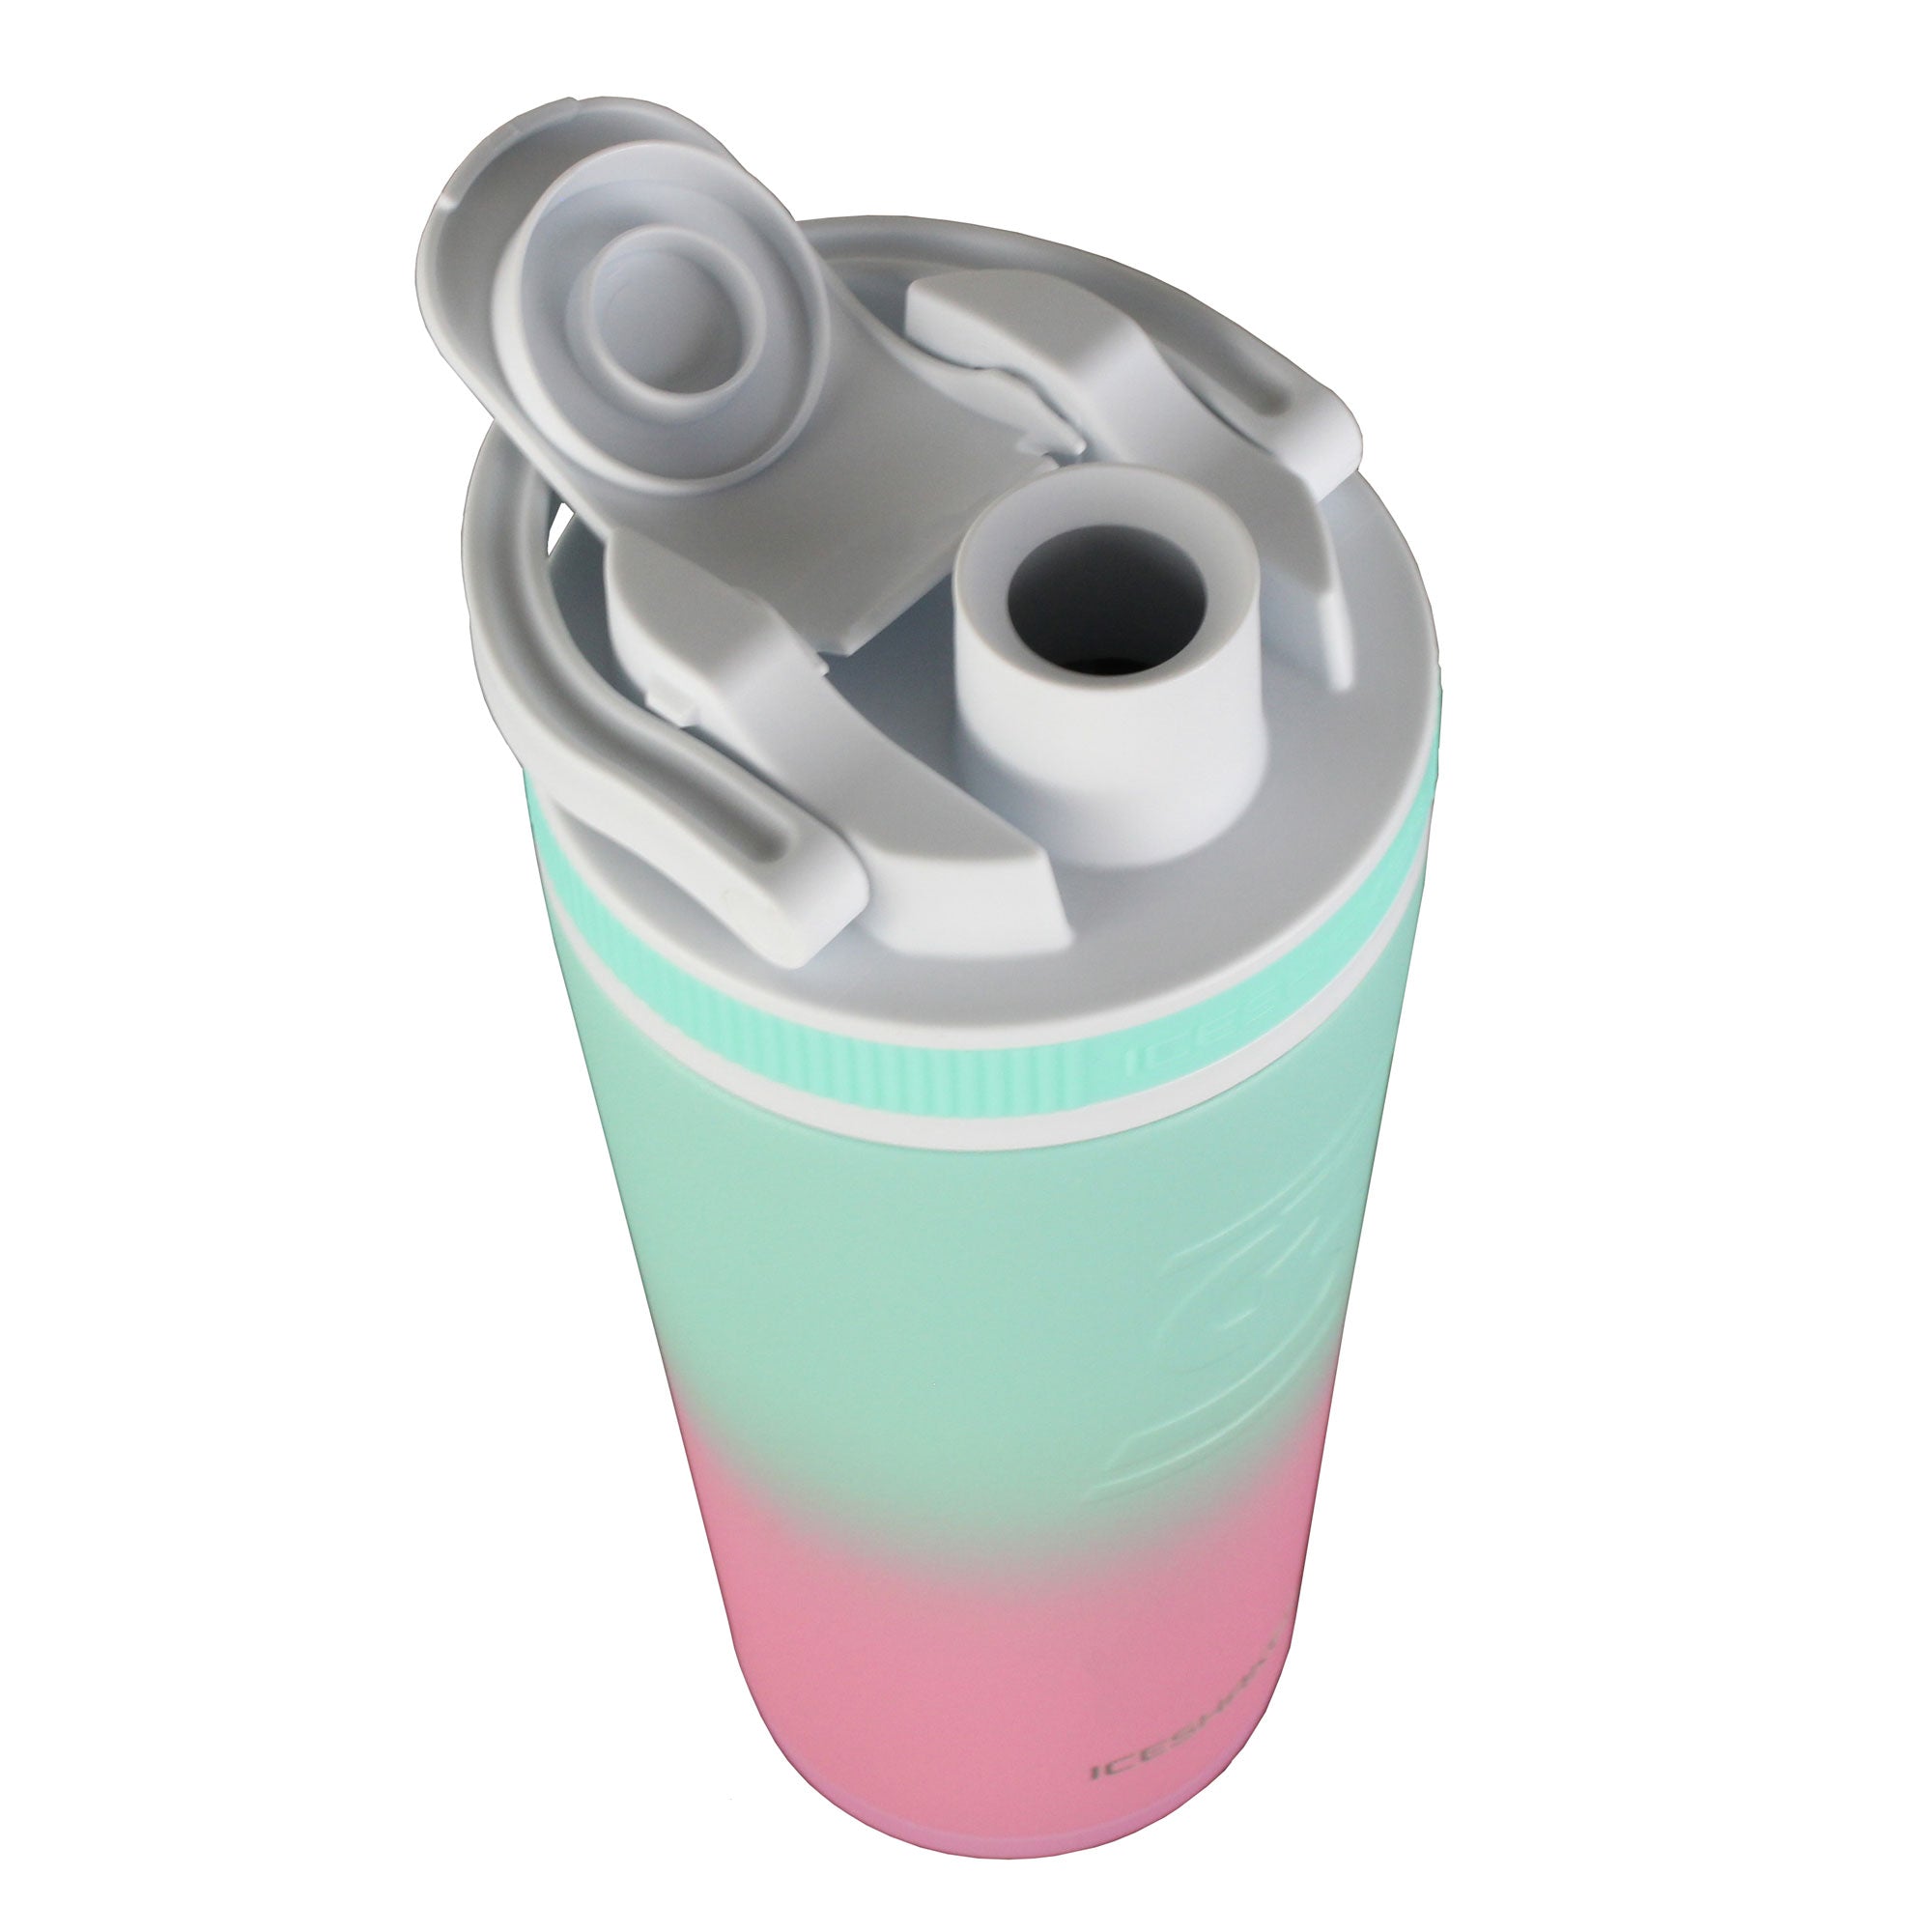 26oz Ice Shaker Bottle - Pink / Mint Ombre